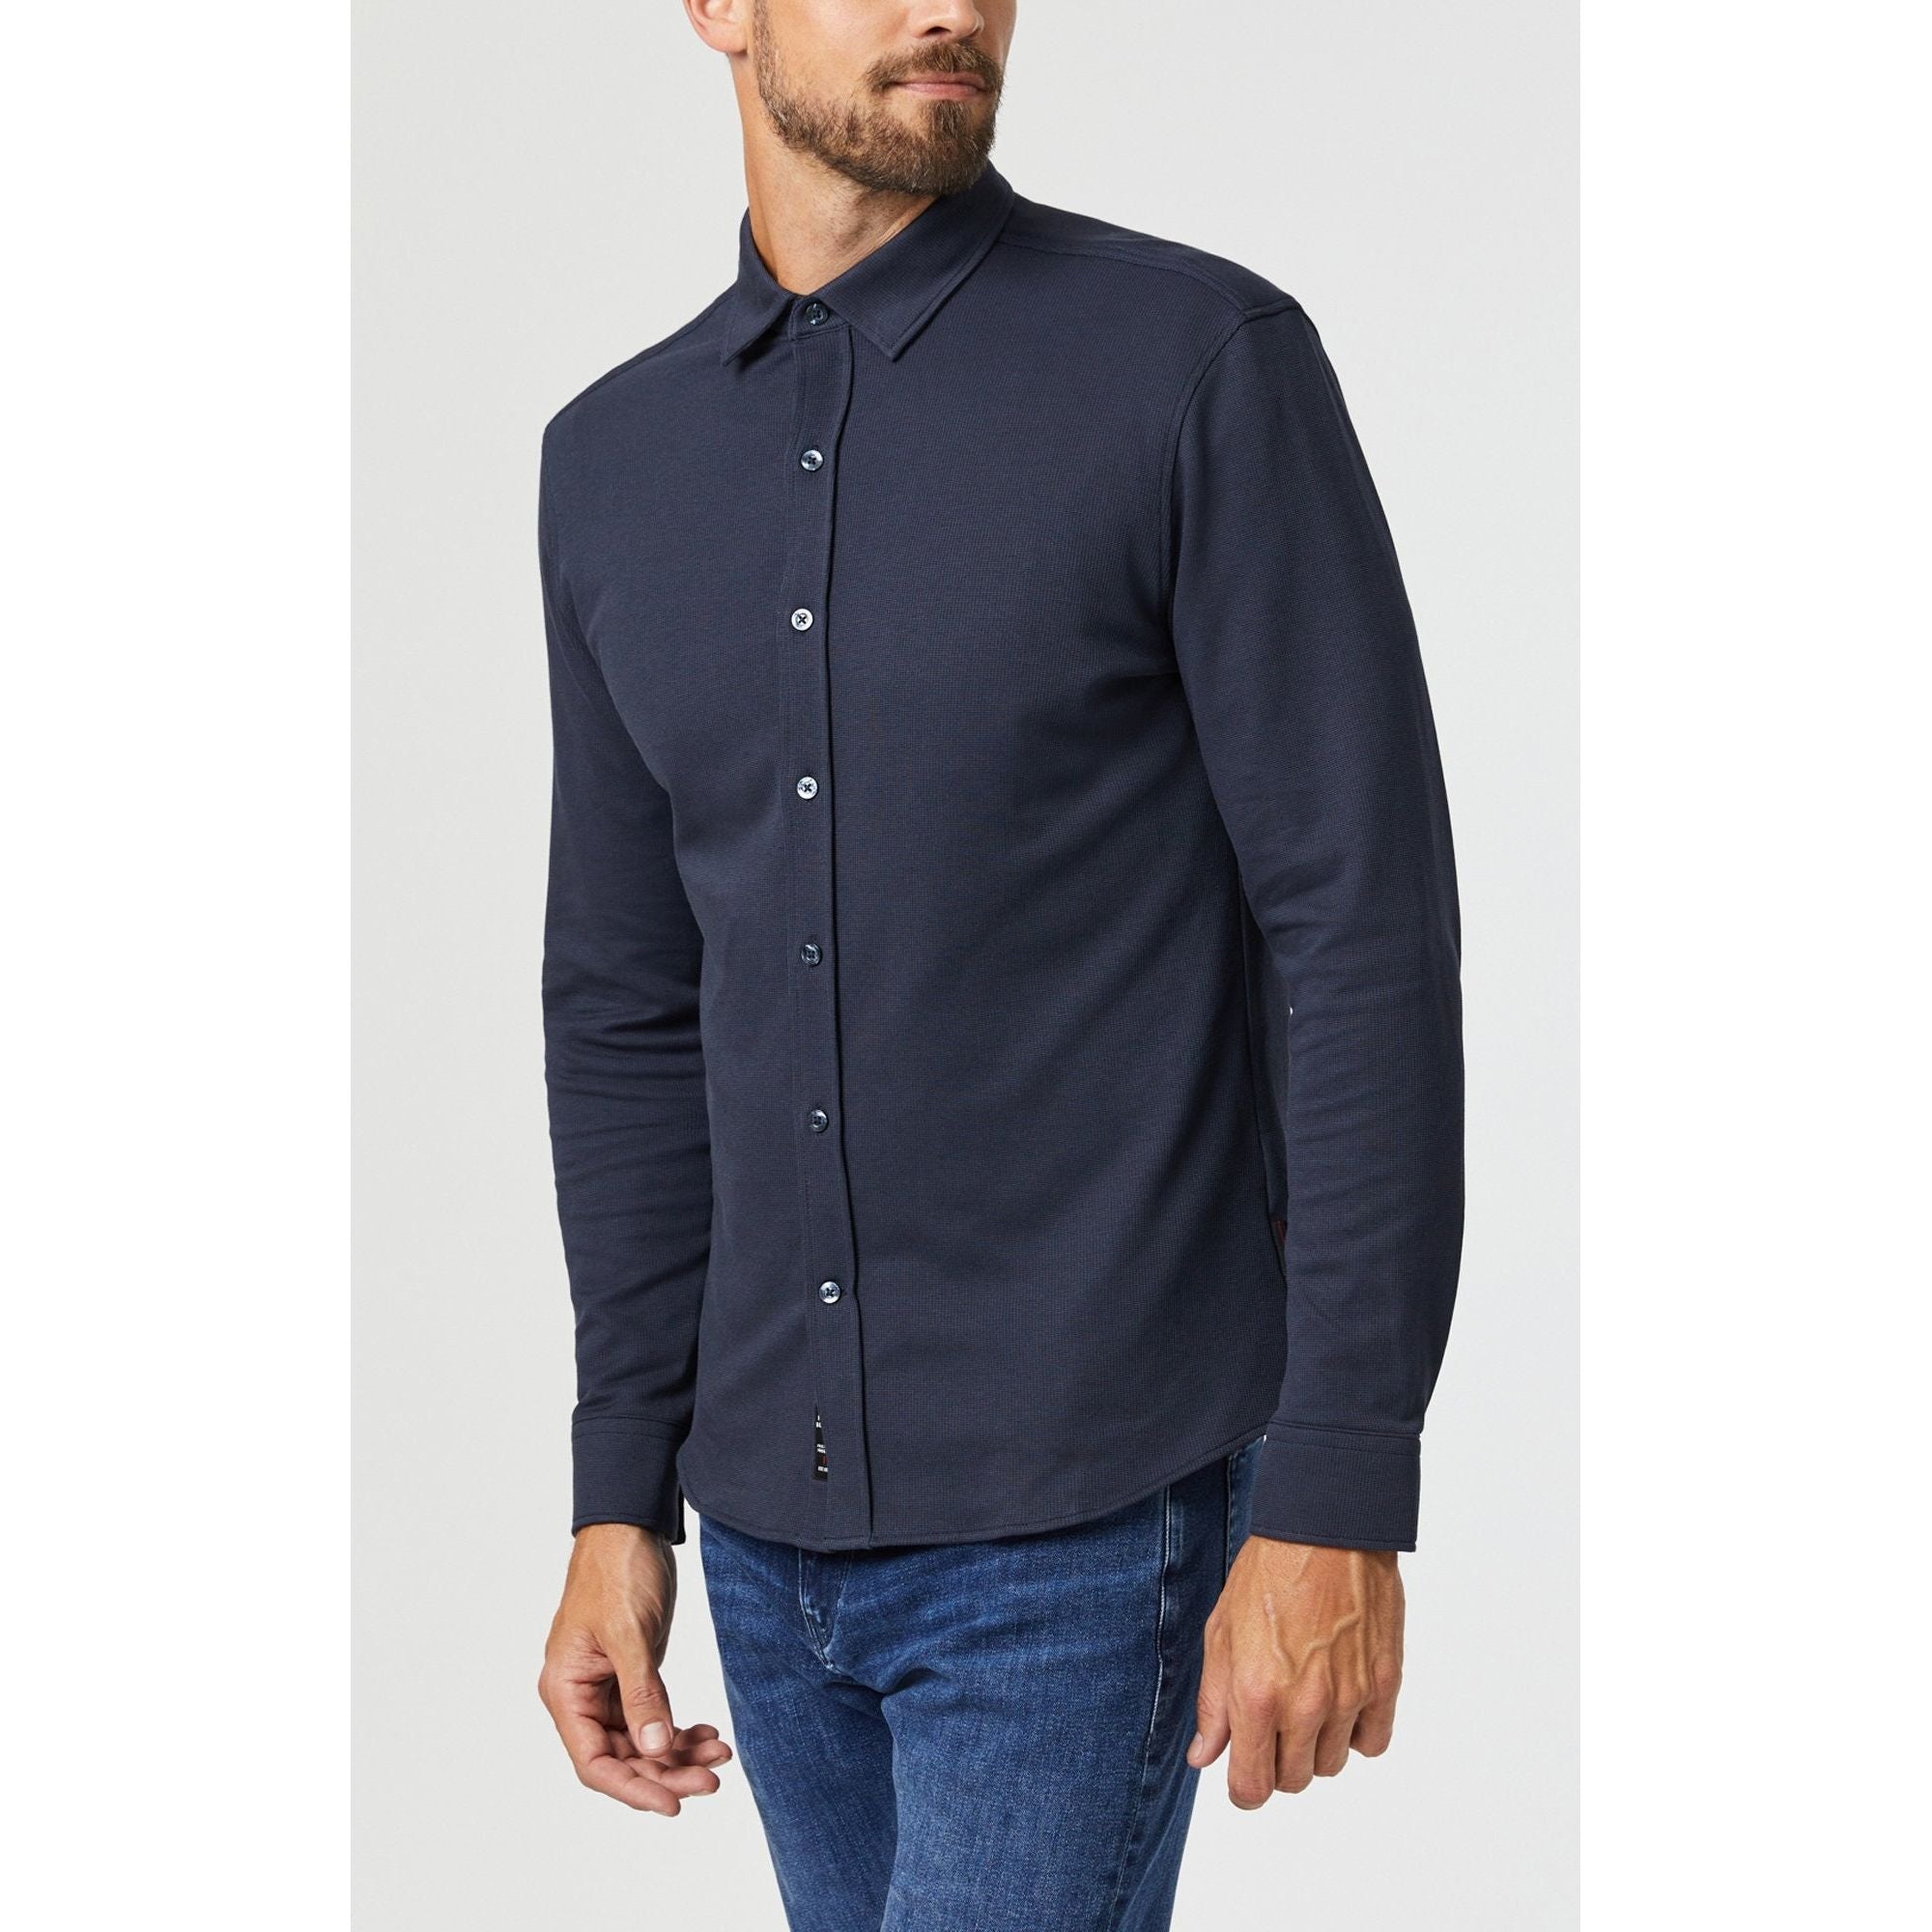 Mavi - Button Up Shirt in Mood Indigo-SQ2384258